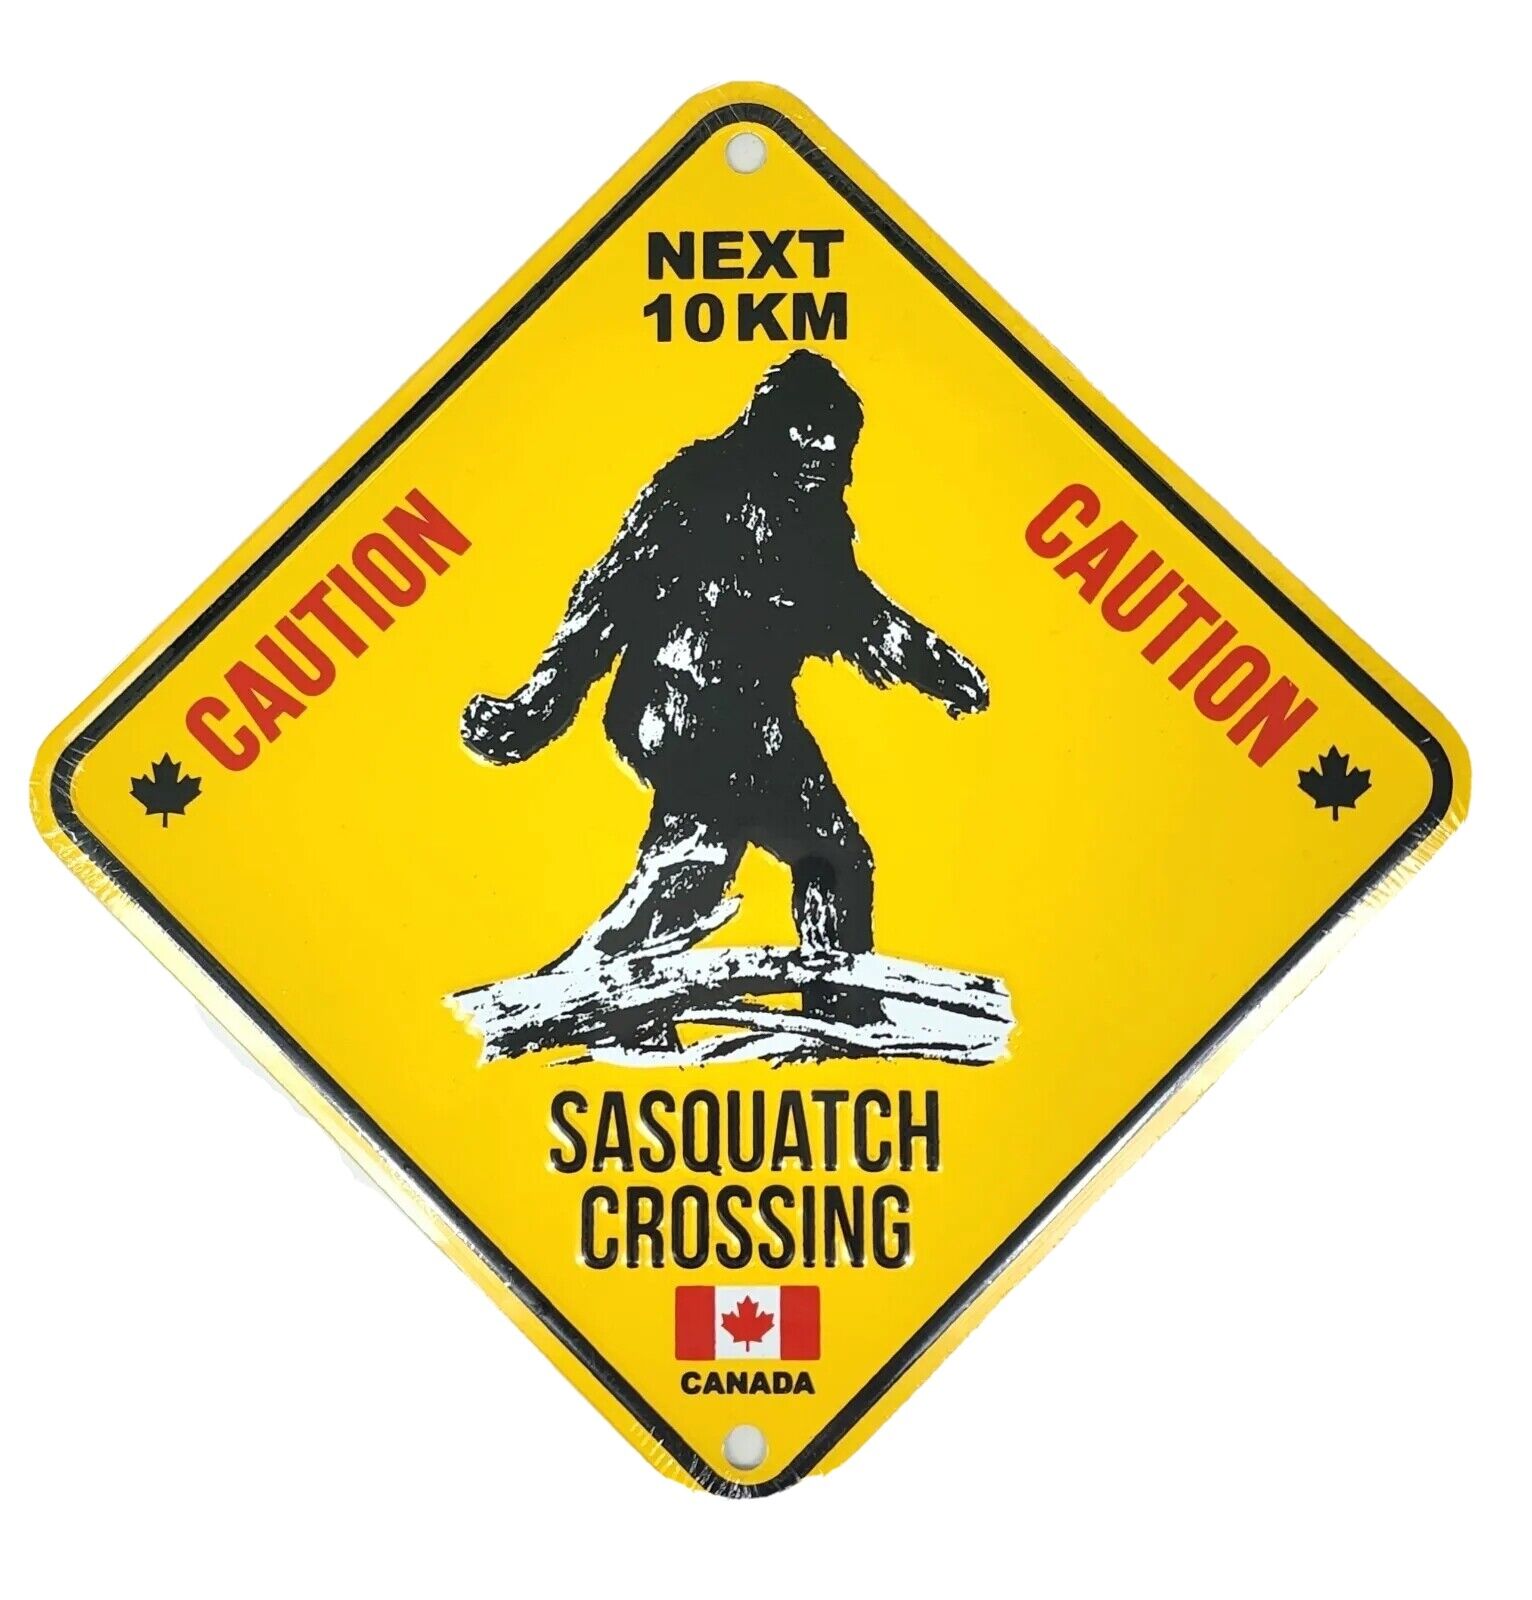 SASQUATCH CROSSING Canada Embossed Aluminum Caution Sign Big Foot Wall Décor